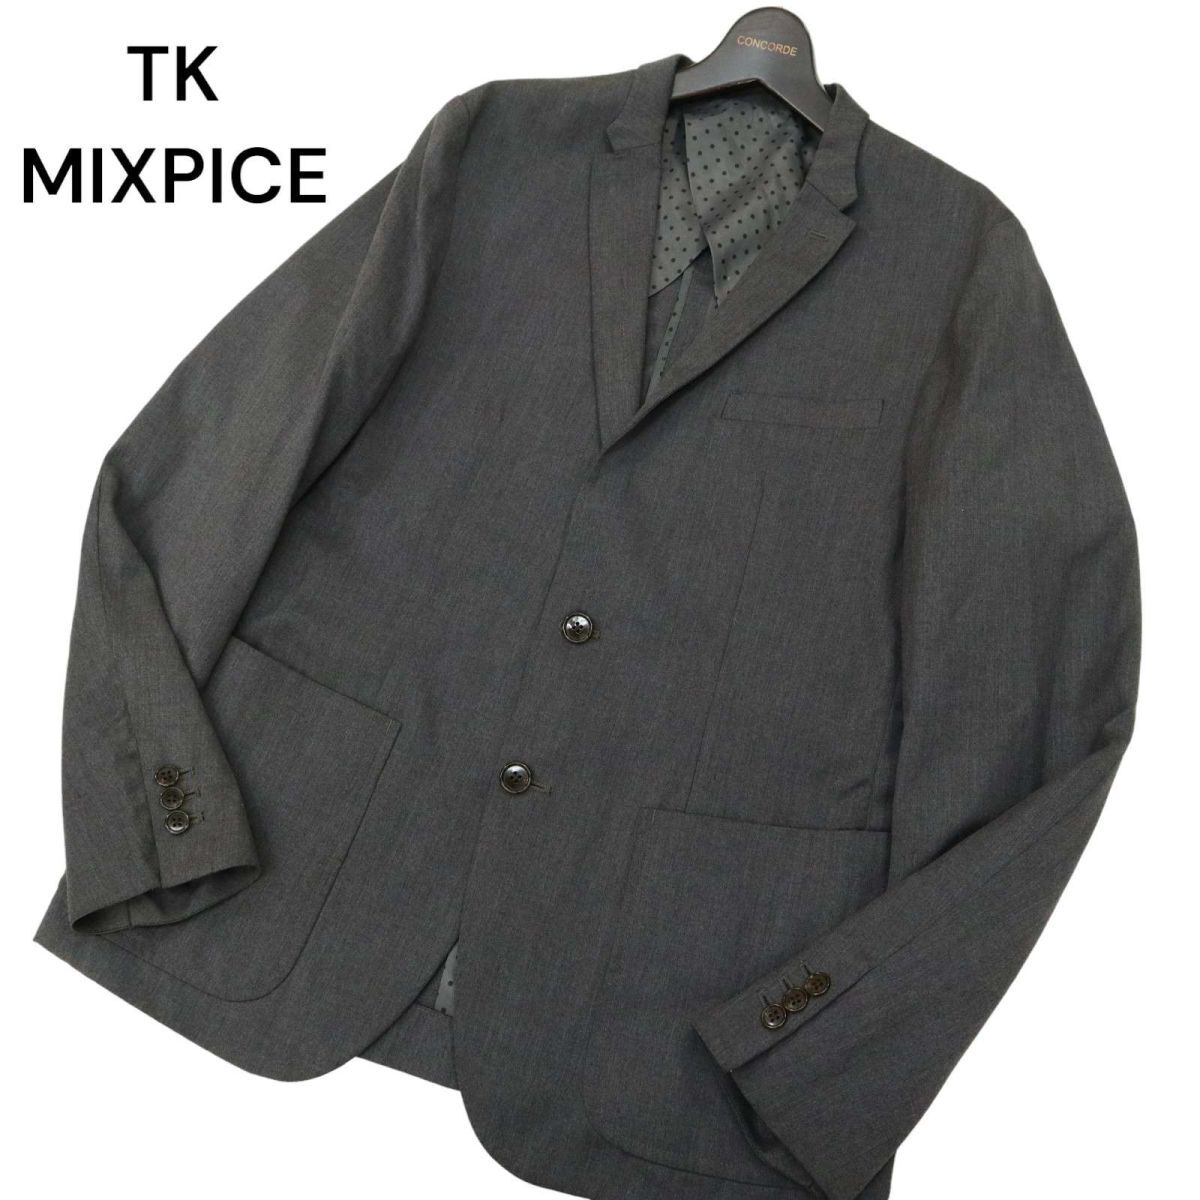 TK MIXPICE Takeo Kikuchi через год необшитый на спине 2B tailored jacket Sz.XL мужской серый большой размер C4T02067_3#O